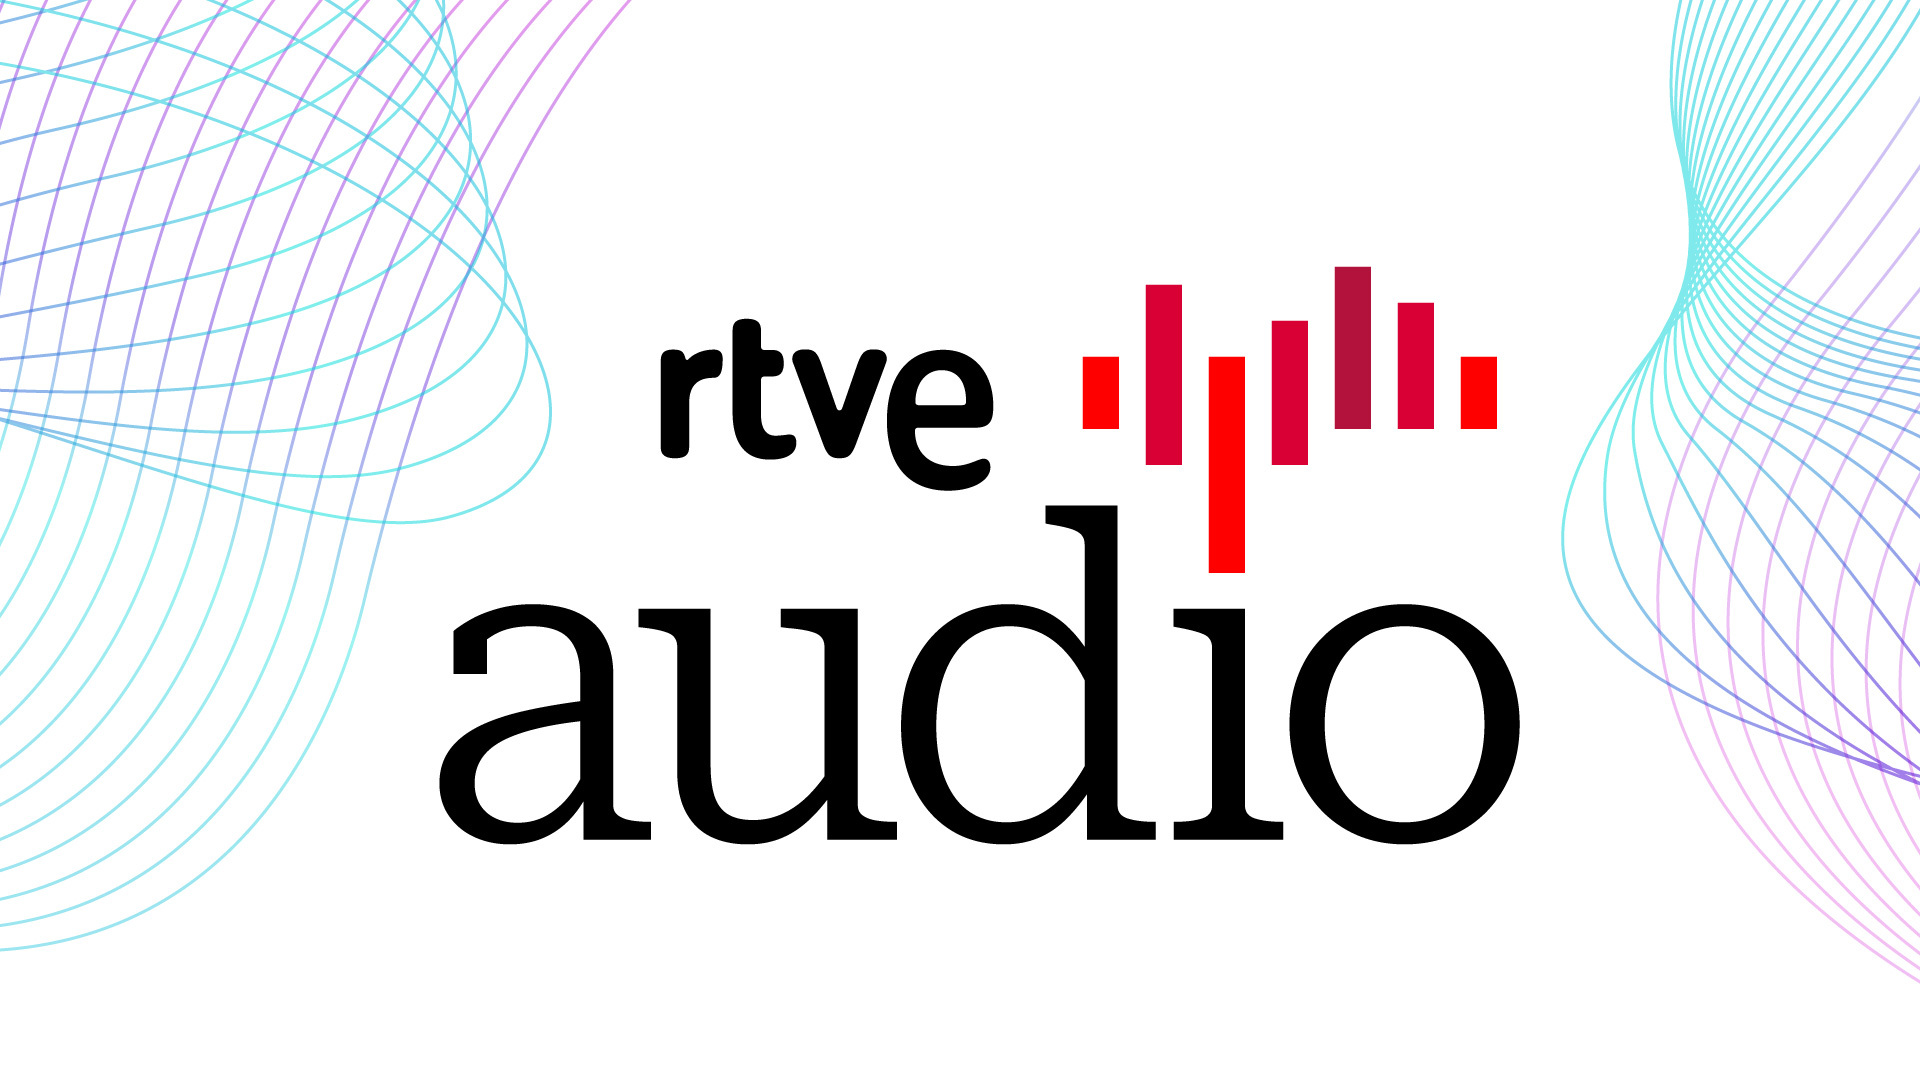 Radio 3: Programas de radio de RNE en RTVE